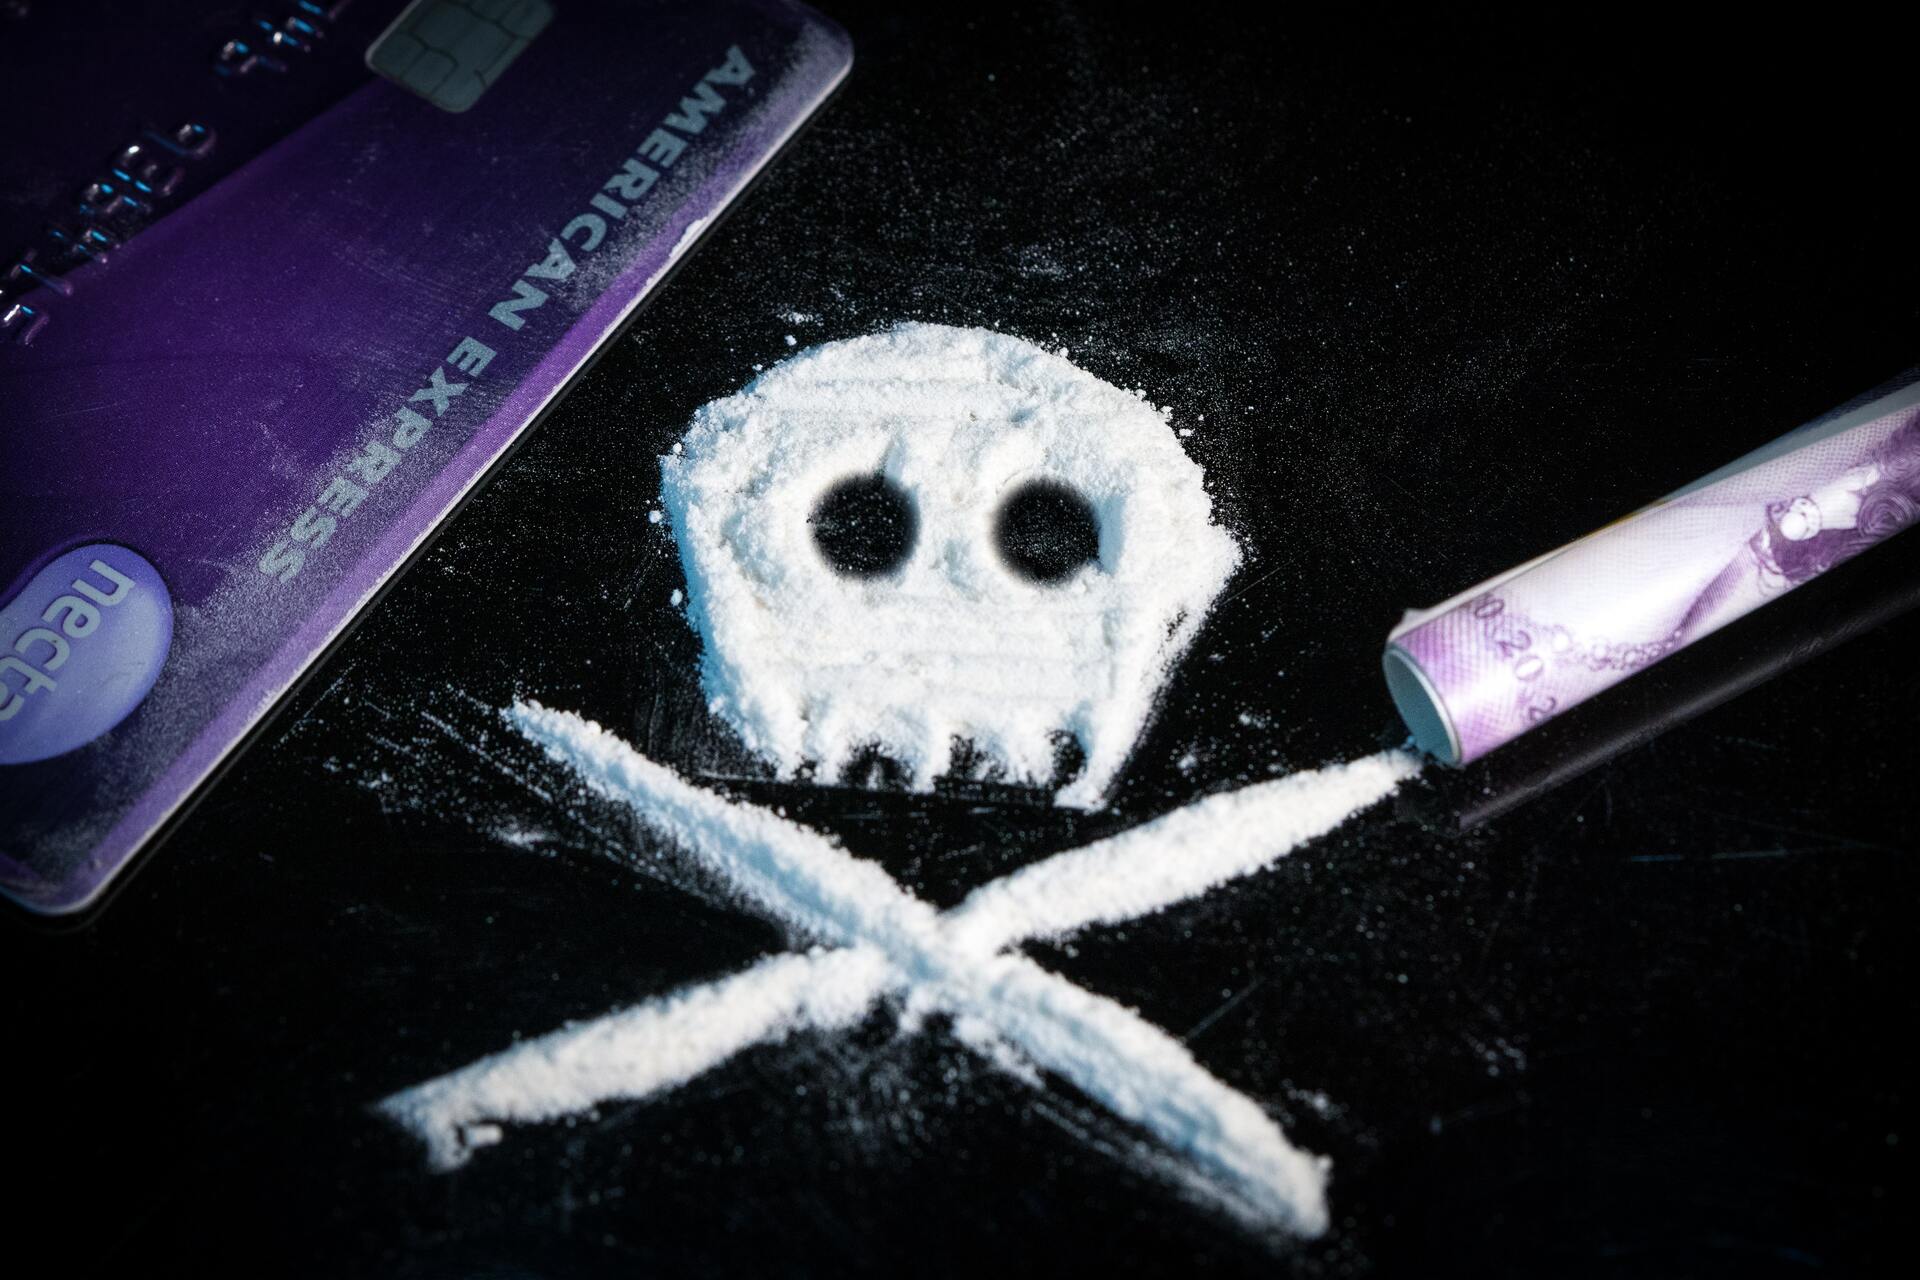 EUA registra cerca de 107 mil muertes por sobredosis de drogas en 2021